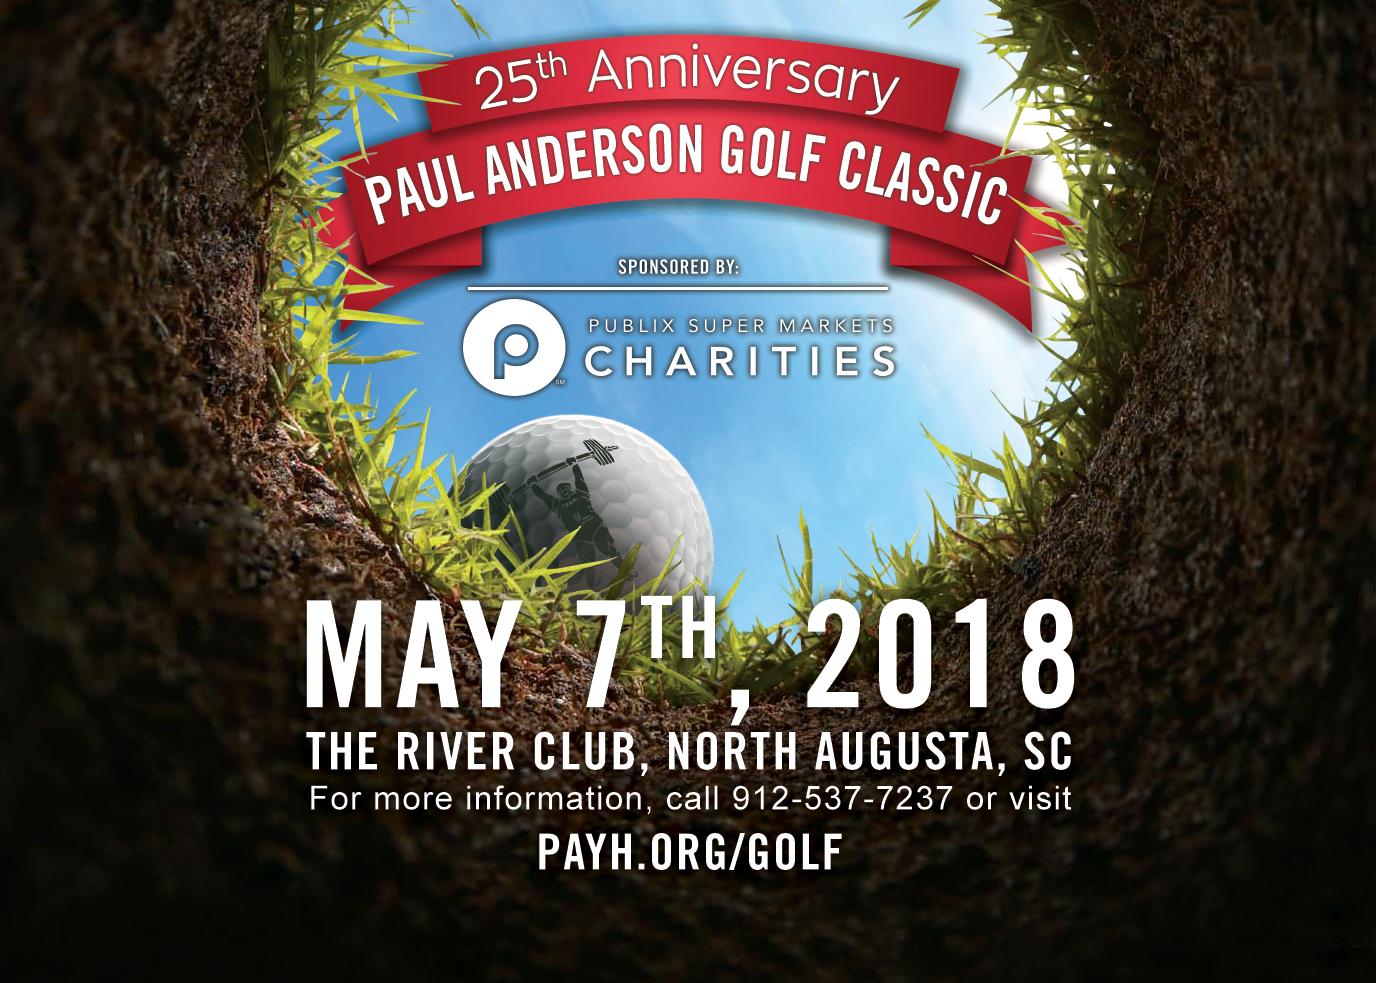 25th Anniversary Paul Anderson Golf Classic